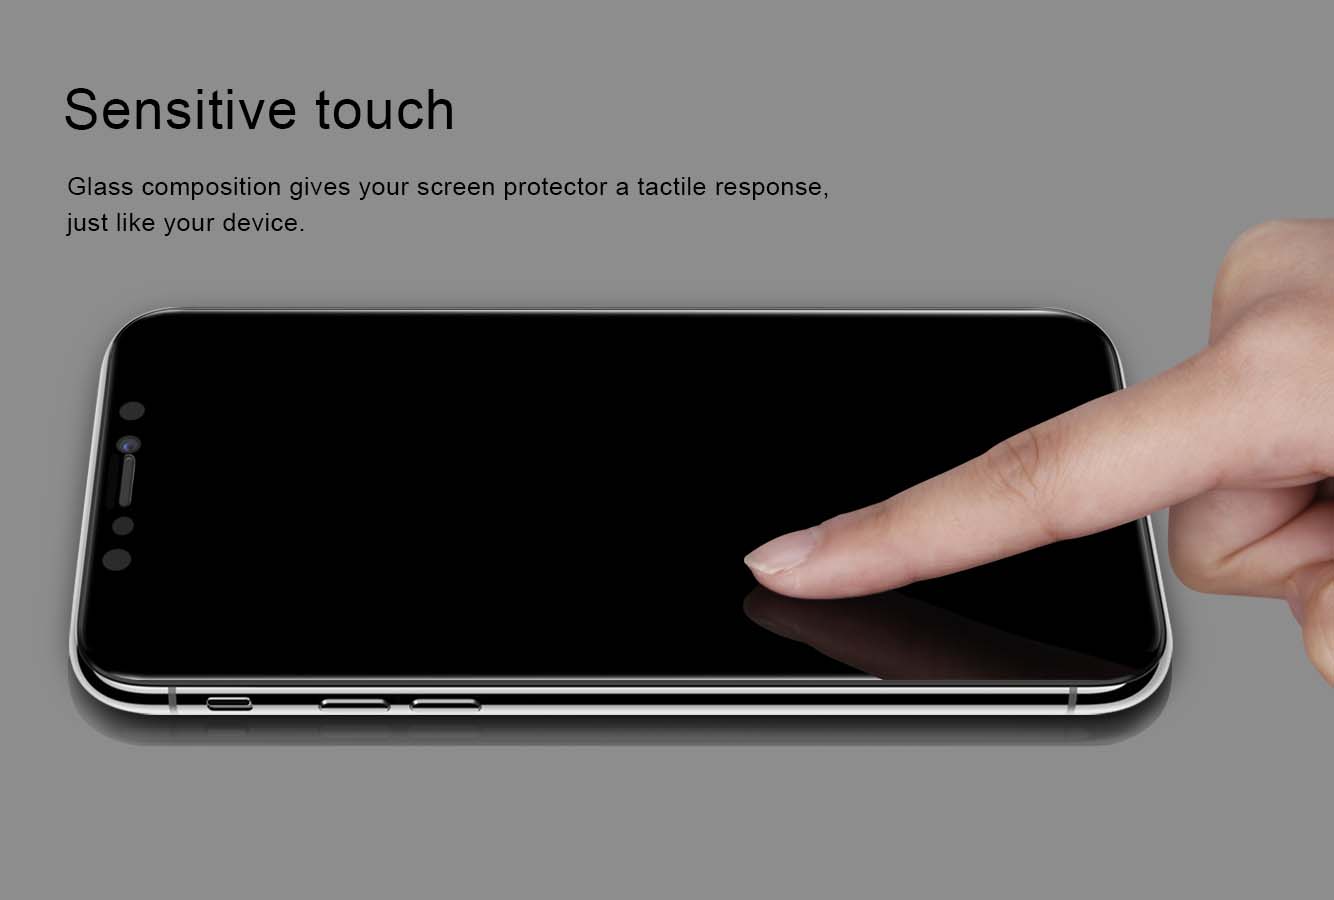 iPhone X screen protector